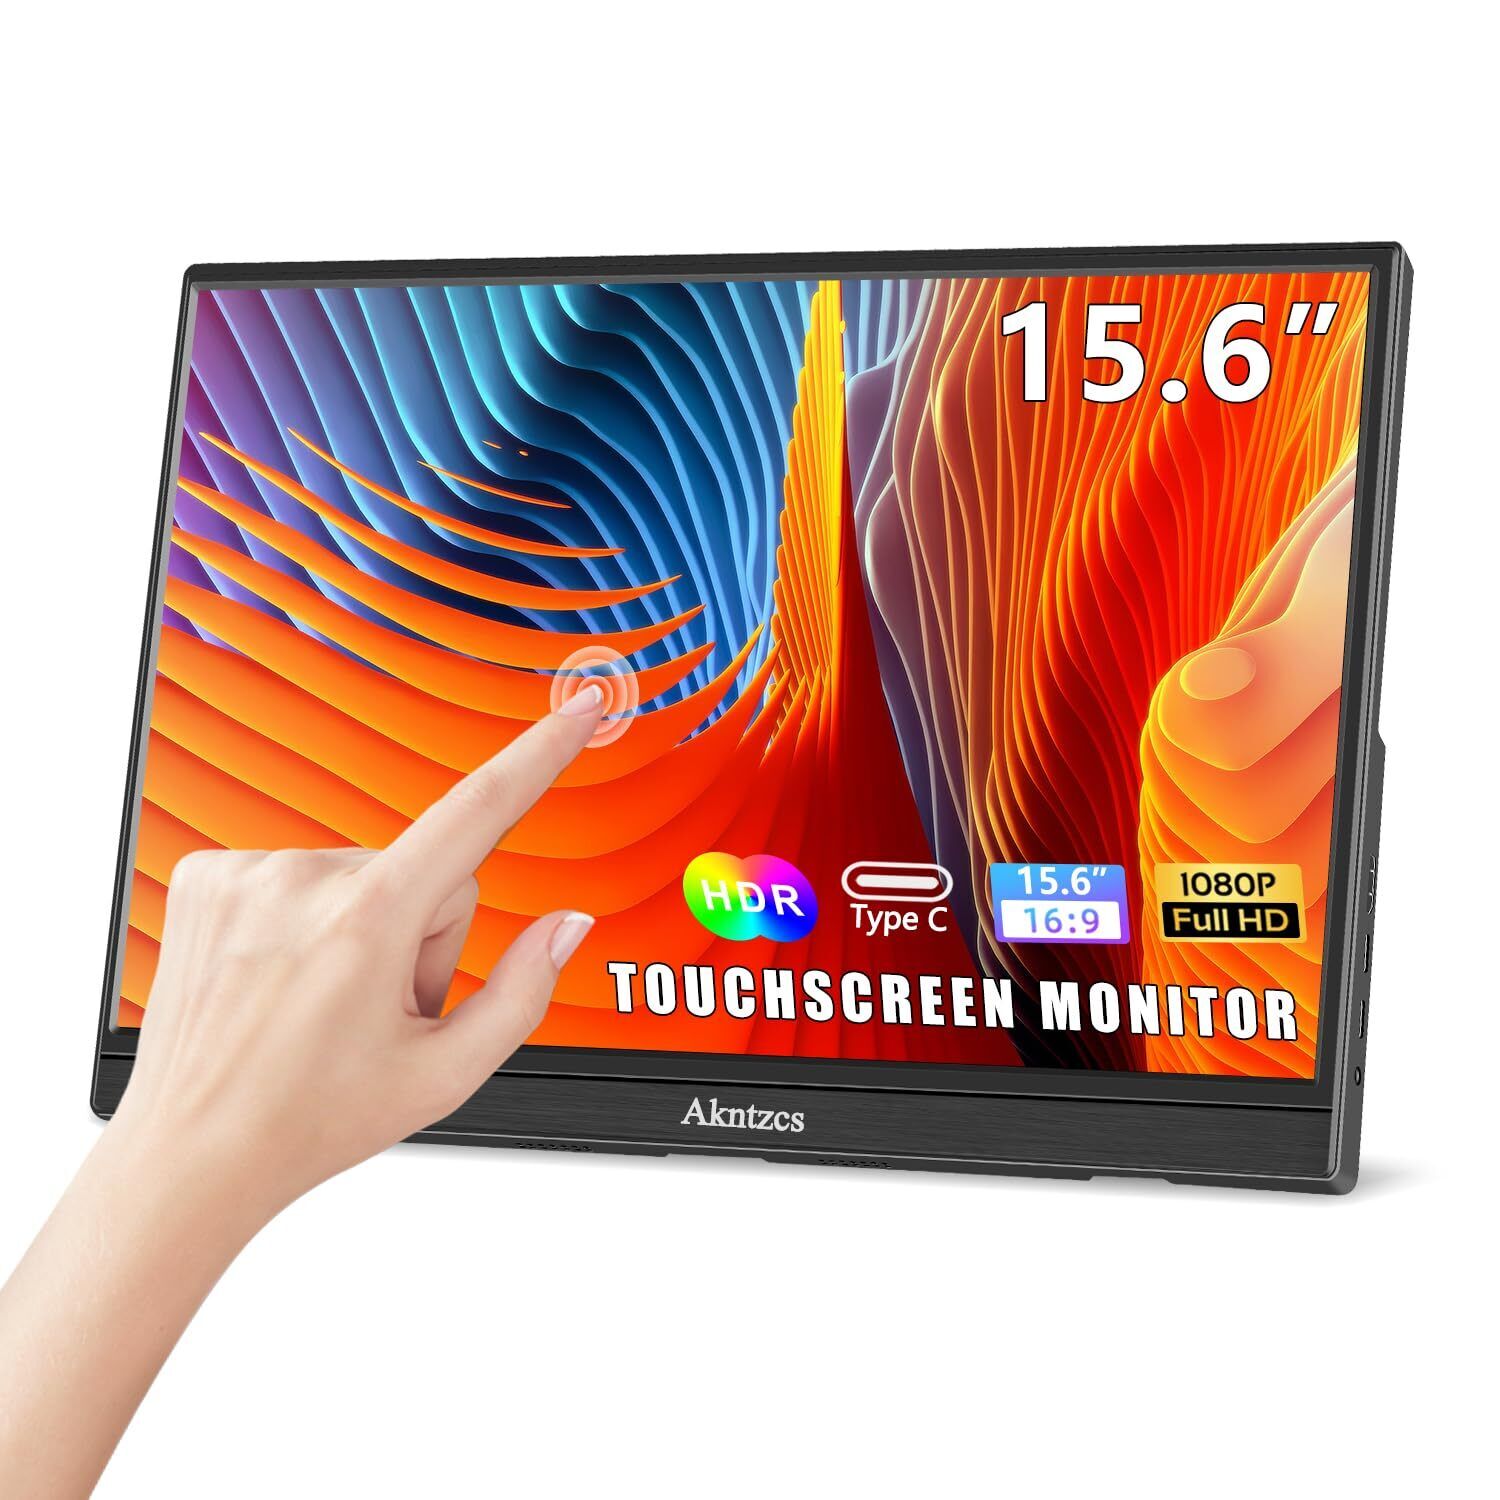 Akntzcs Touchscreen Portable Monitor, 15.6 Inch Full HD 1920x1080P Touchscree...